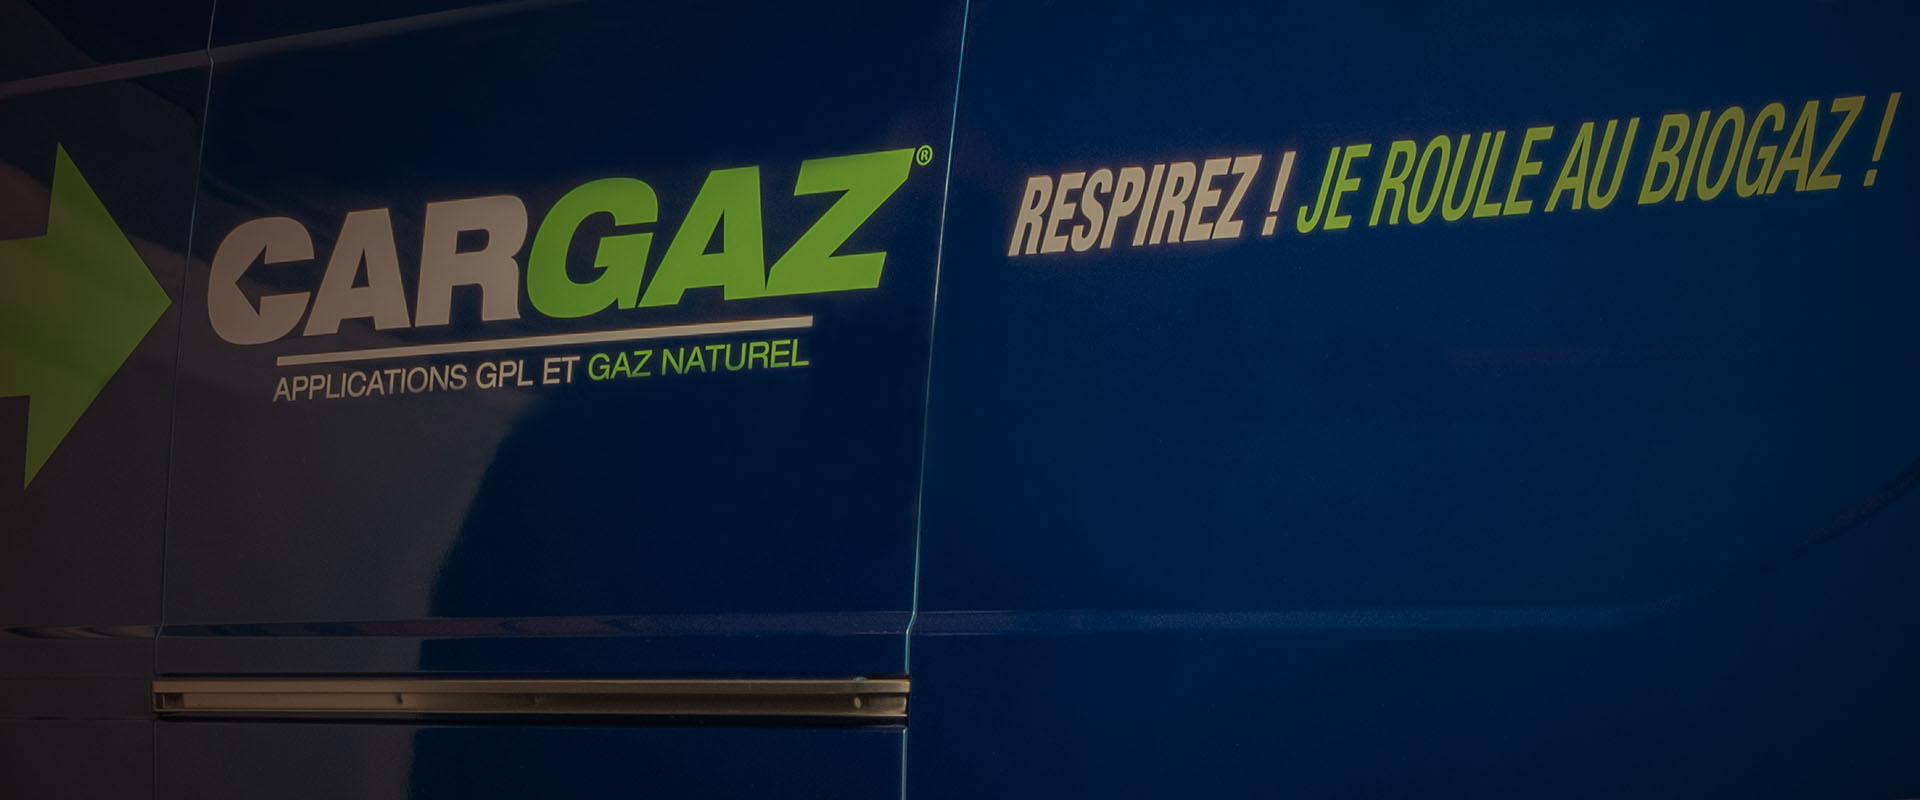 Cargaz, respirez je roule au biogaz !